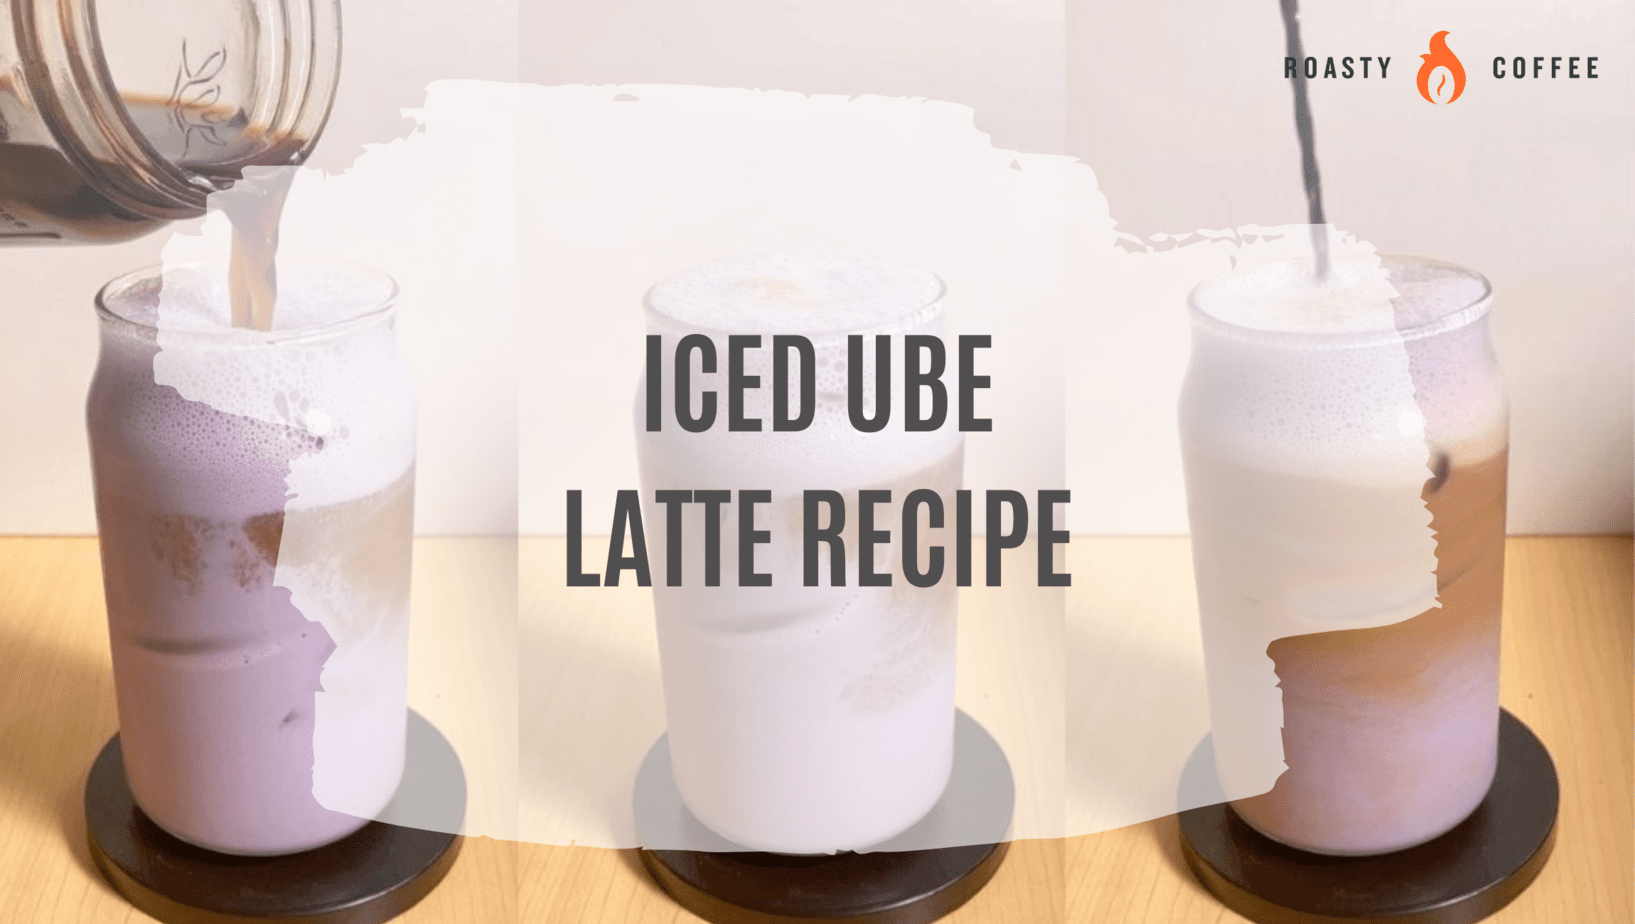 Iced Ube Latte Recipe